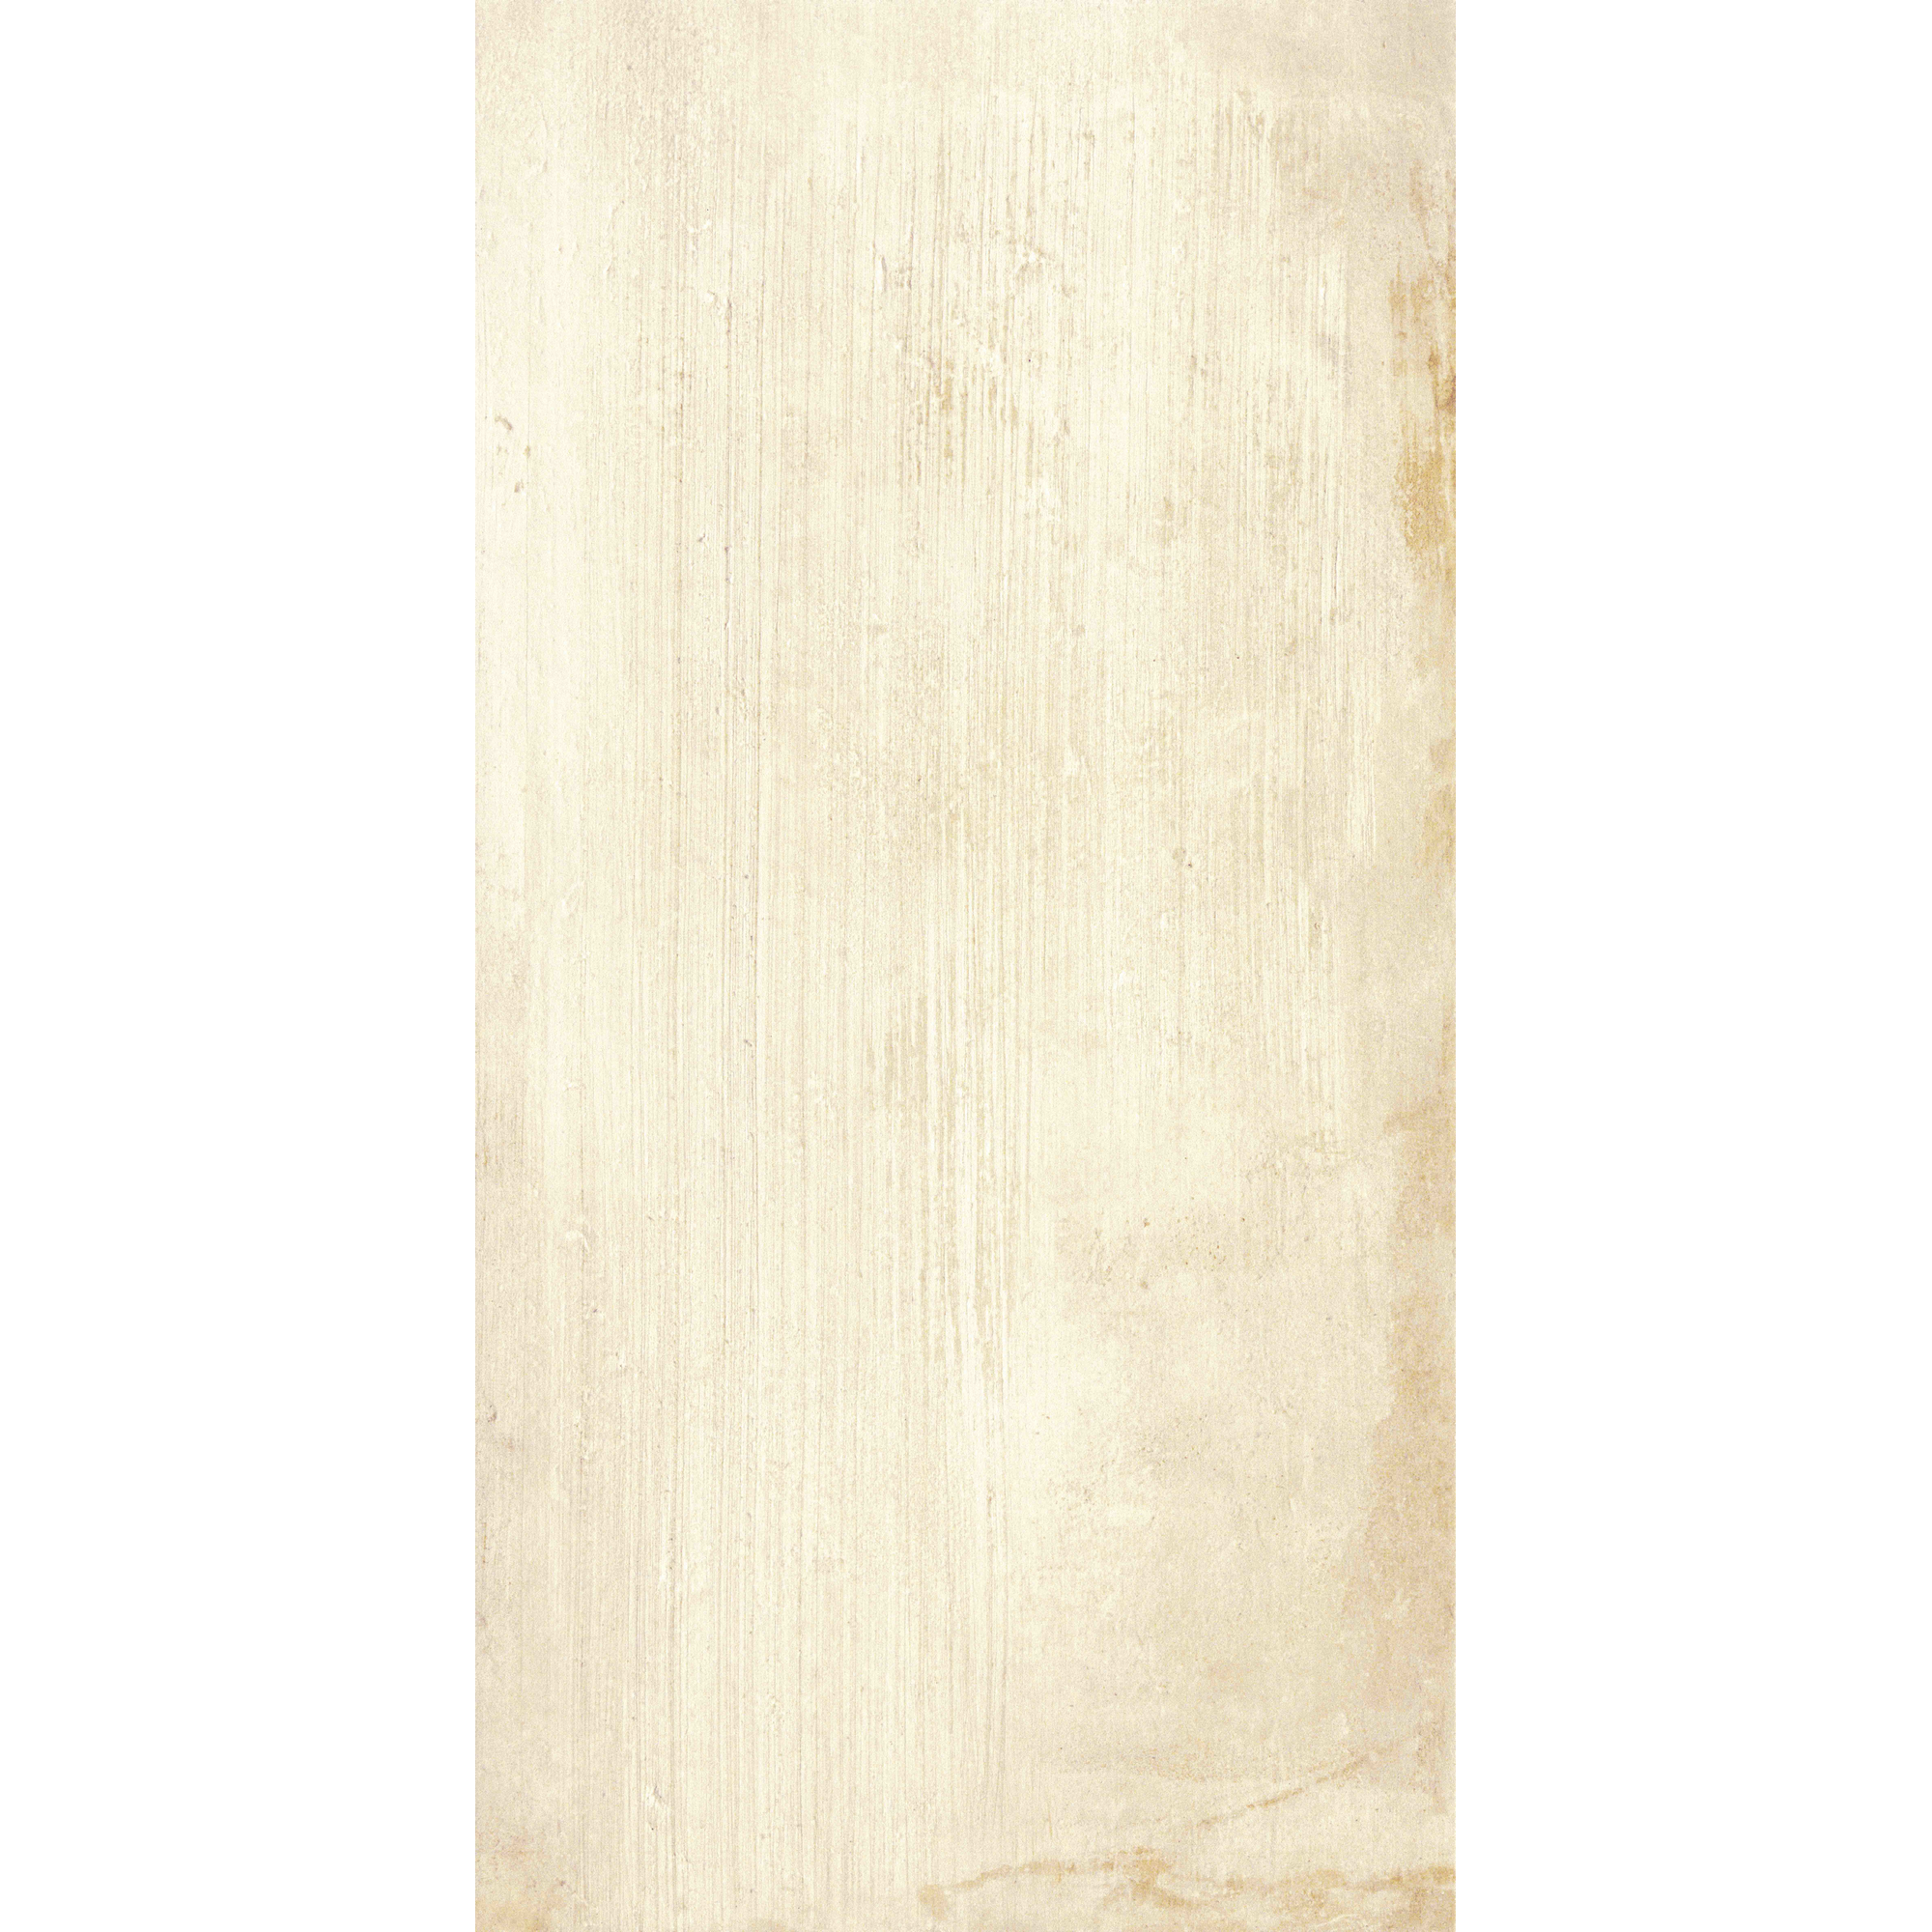 Bodenfliese 'Denver' beige 31 x 61,5 cm + product picture